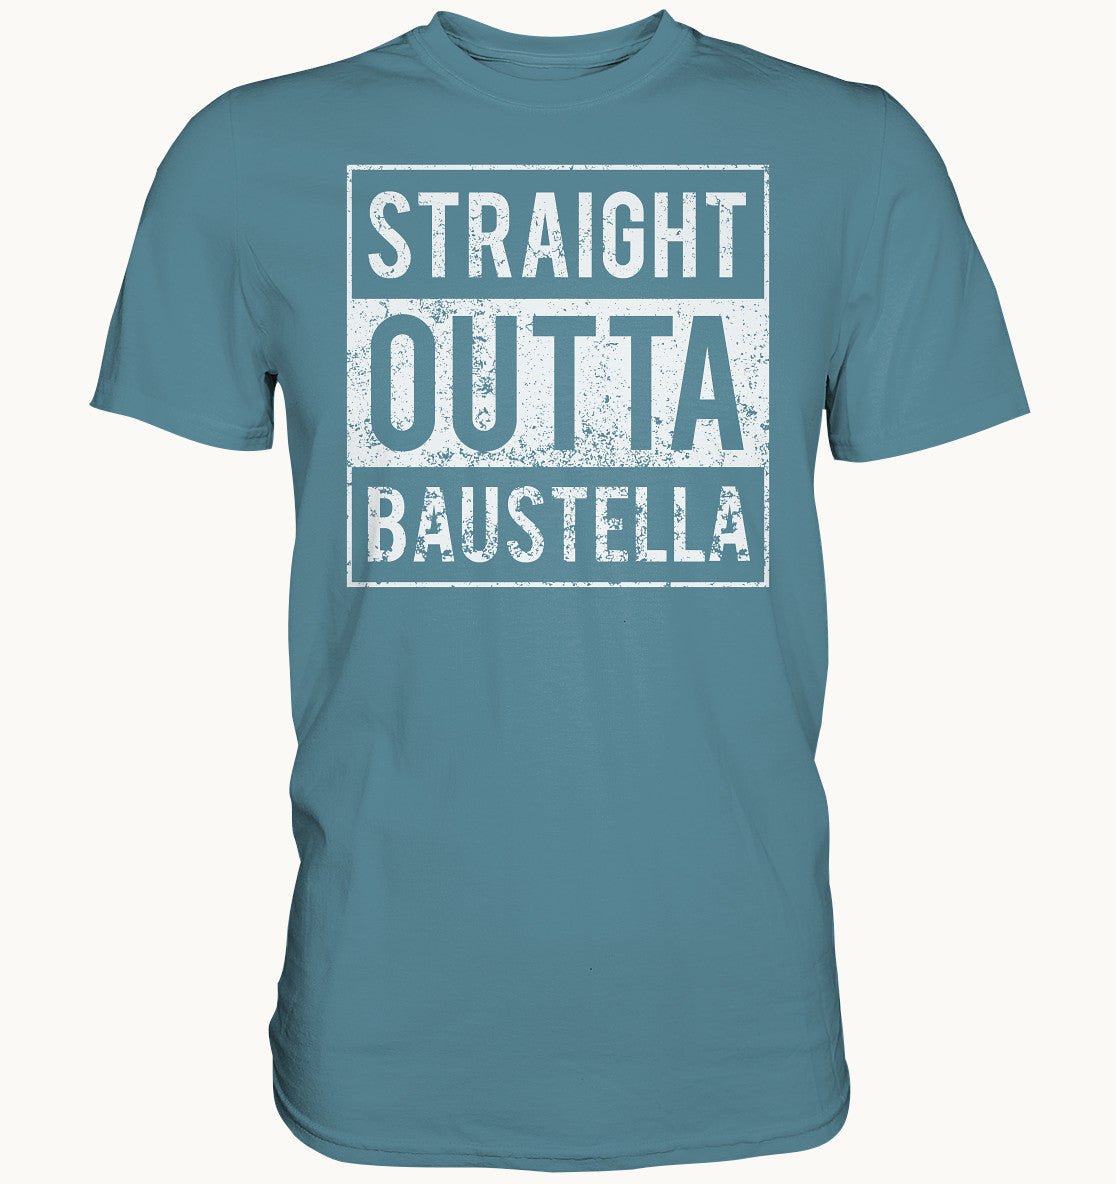 Straight outta Baustella - Premium Shirt